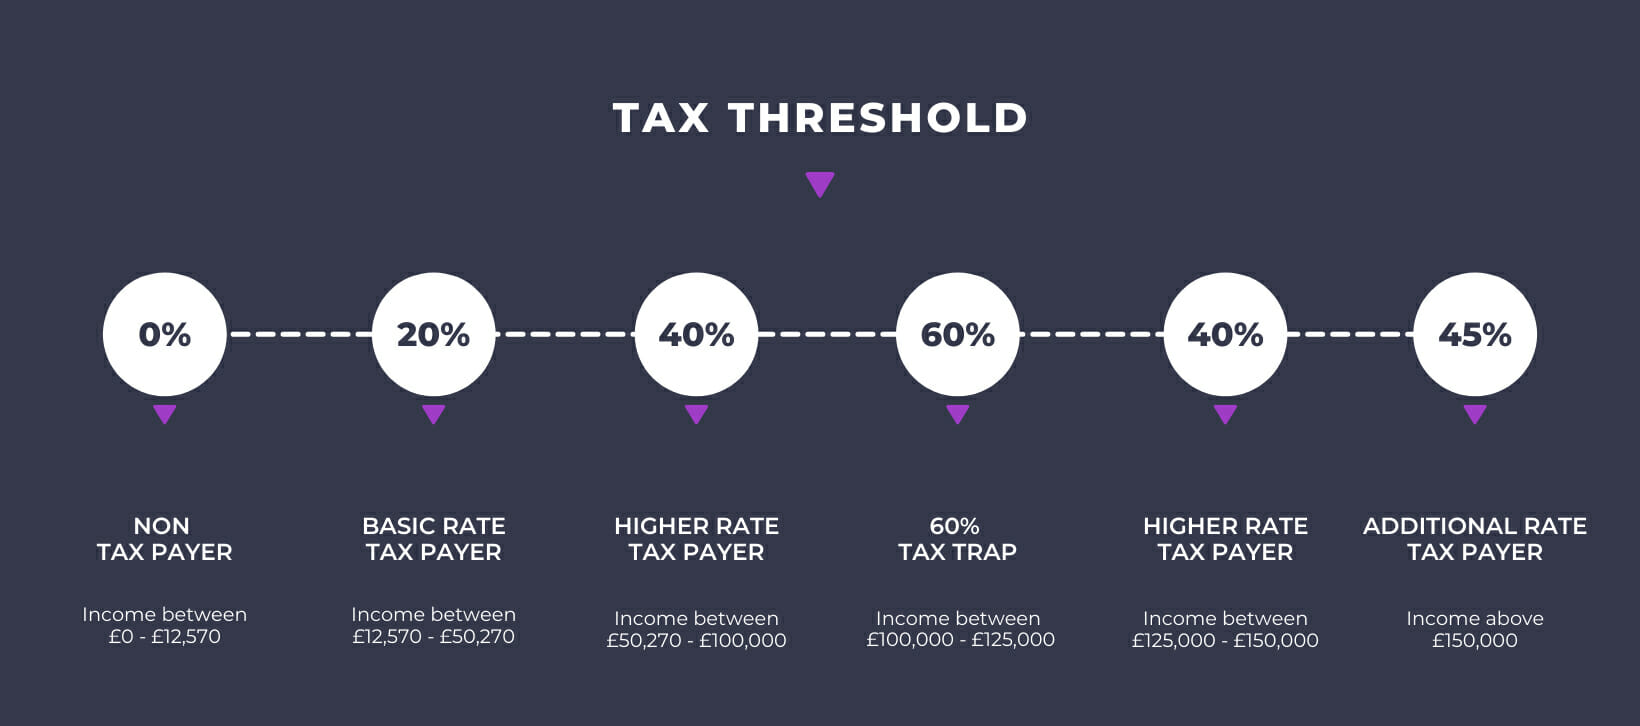 Tax Threshold 2021